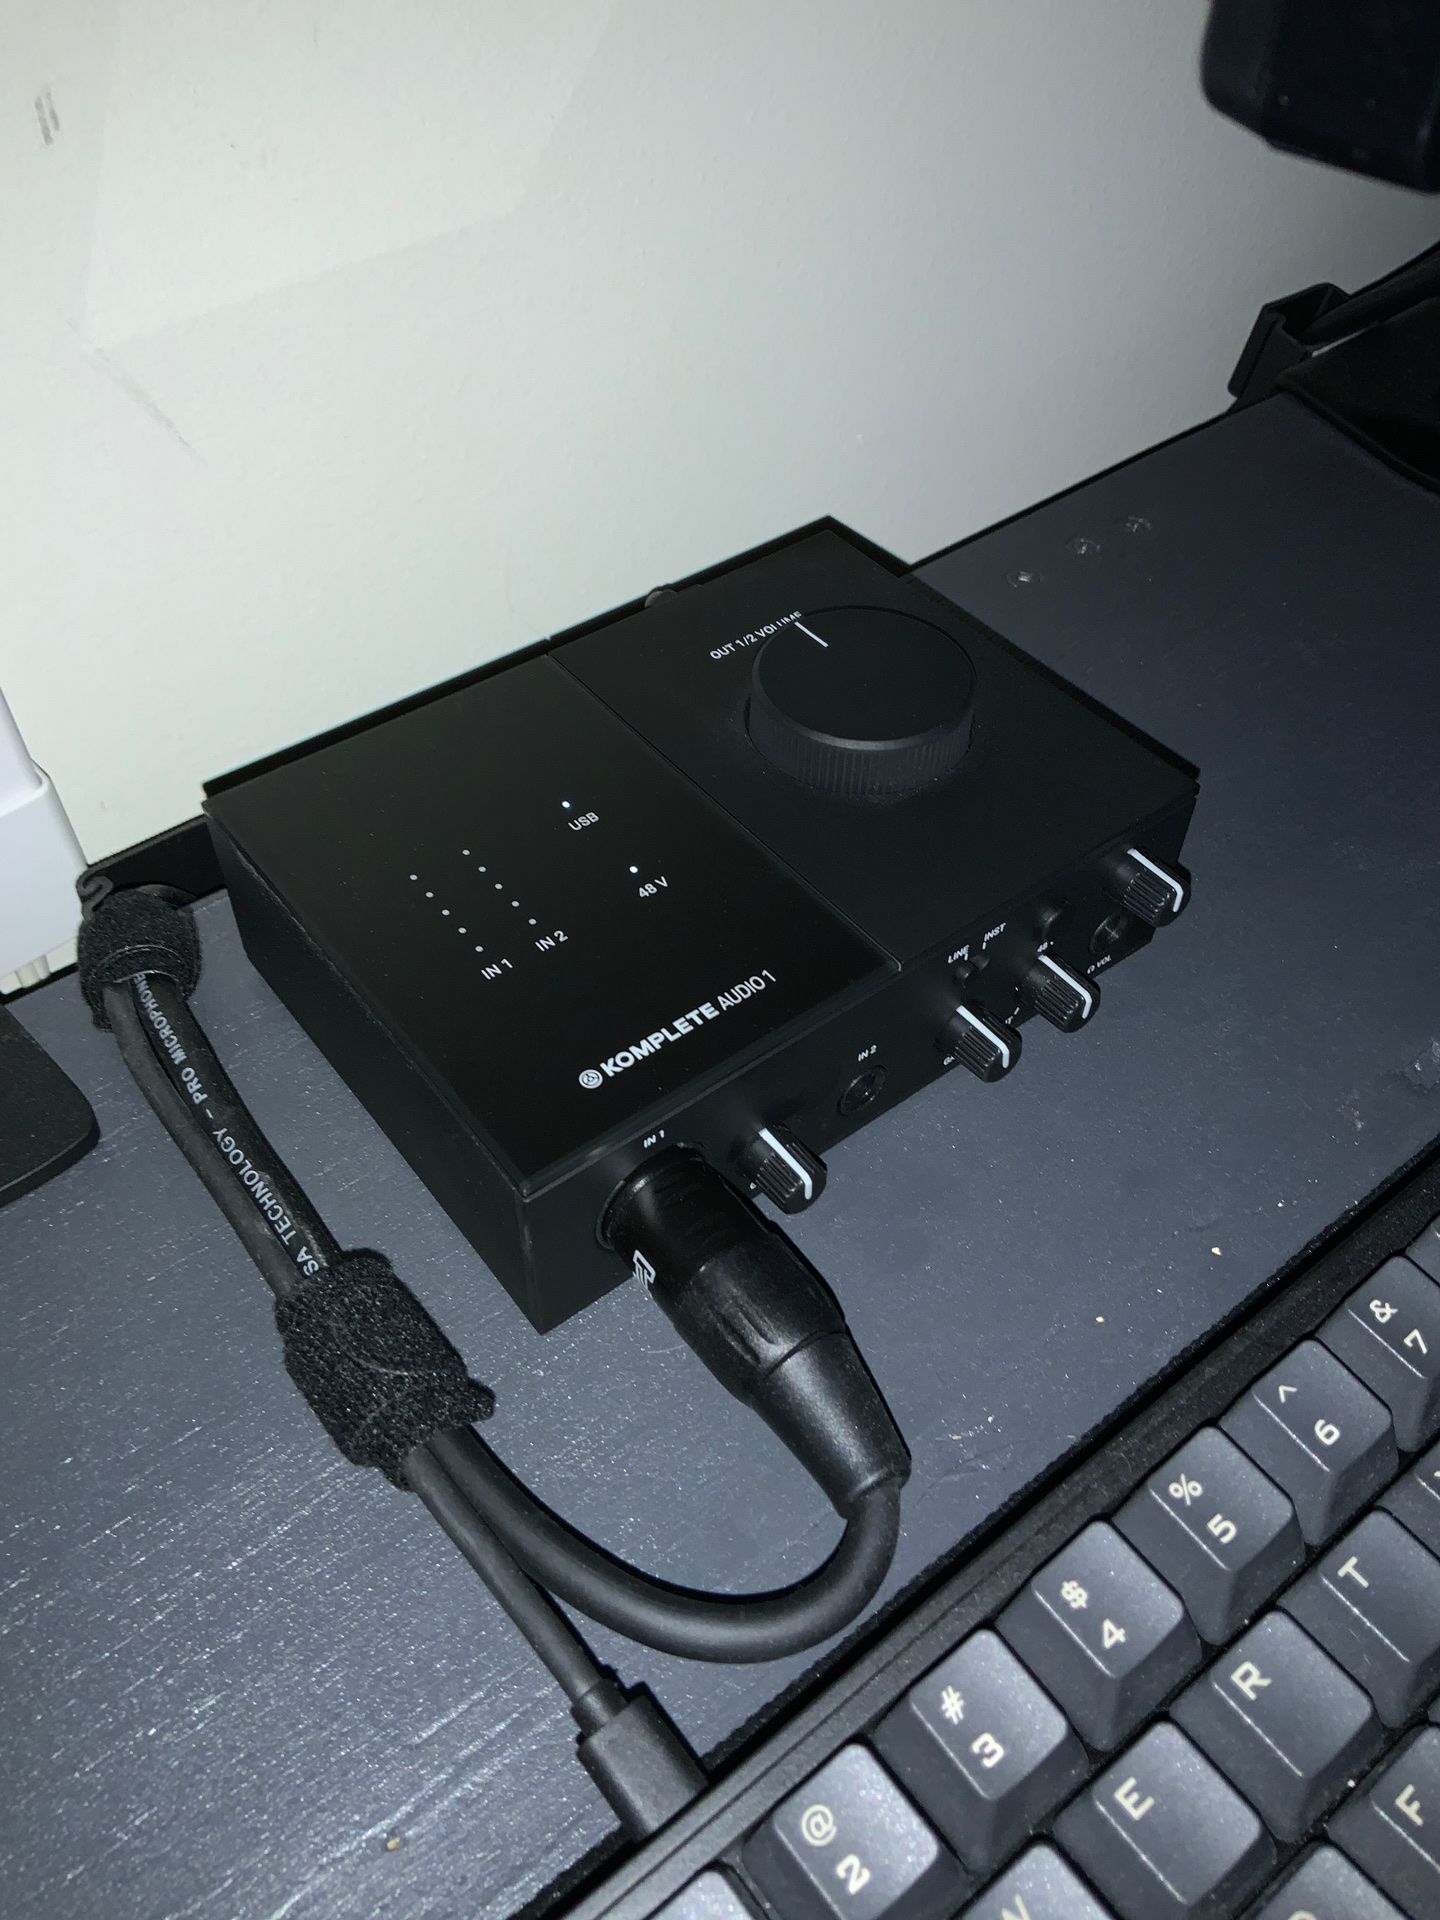 Komplete Audio 1 XLR audio interface with 48v phantom power